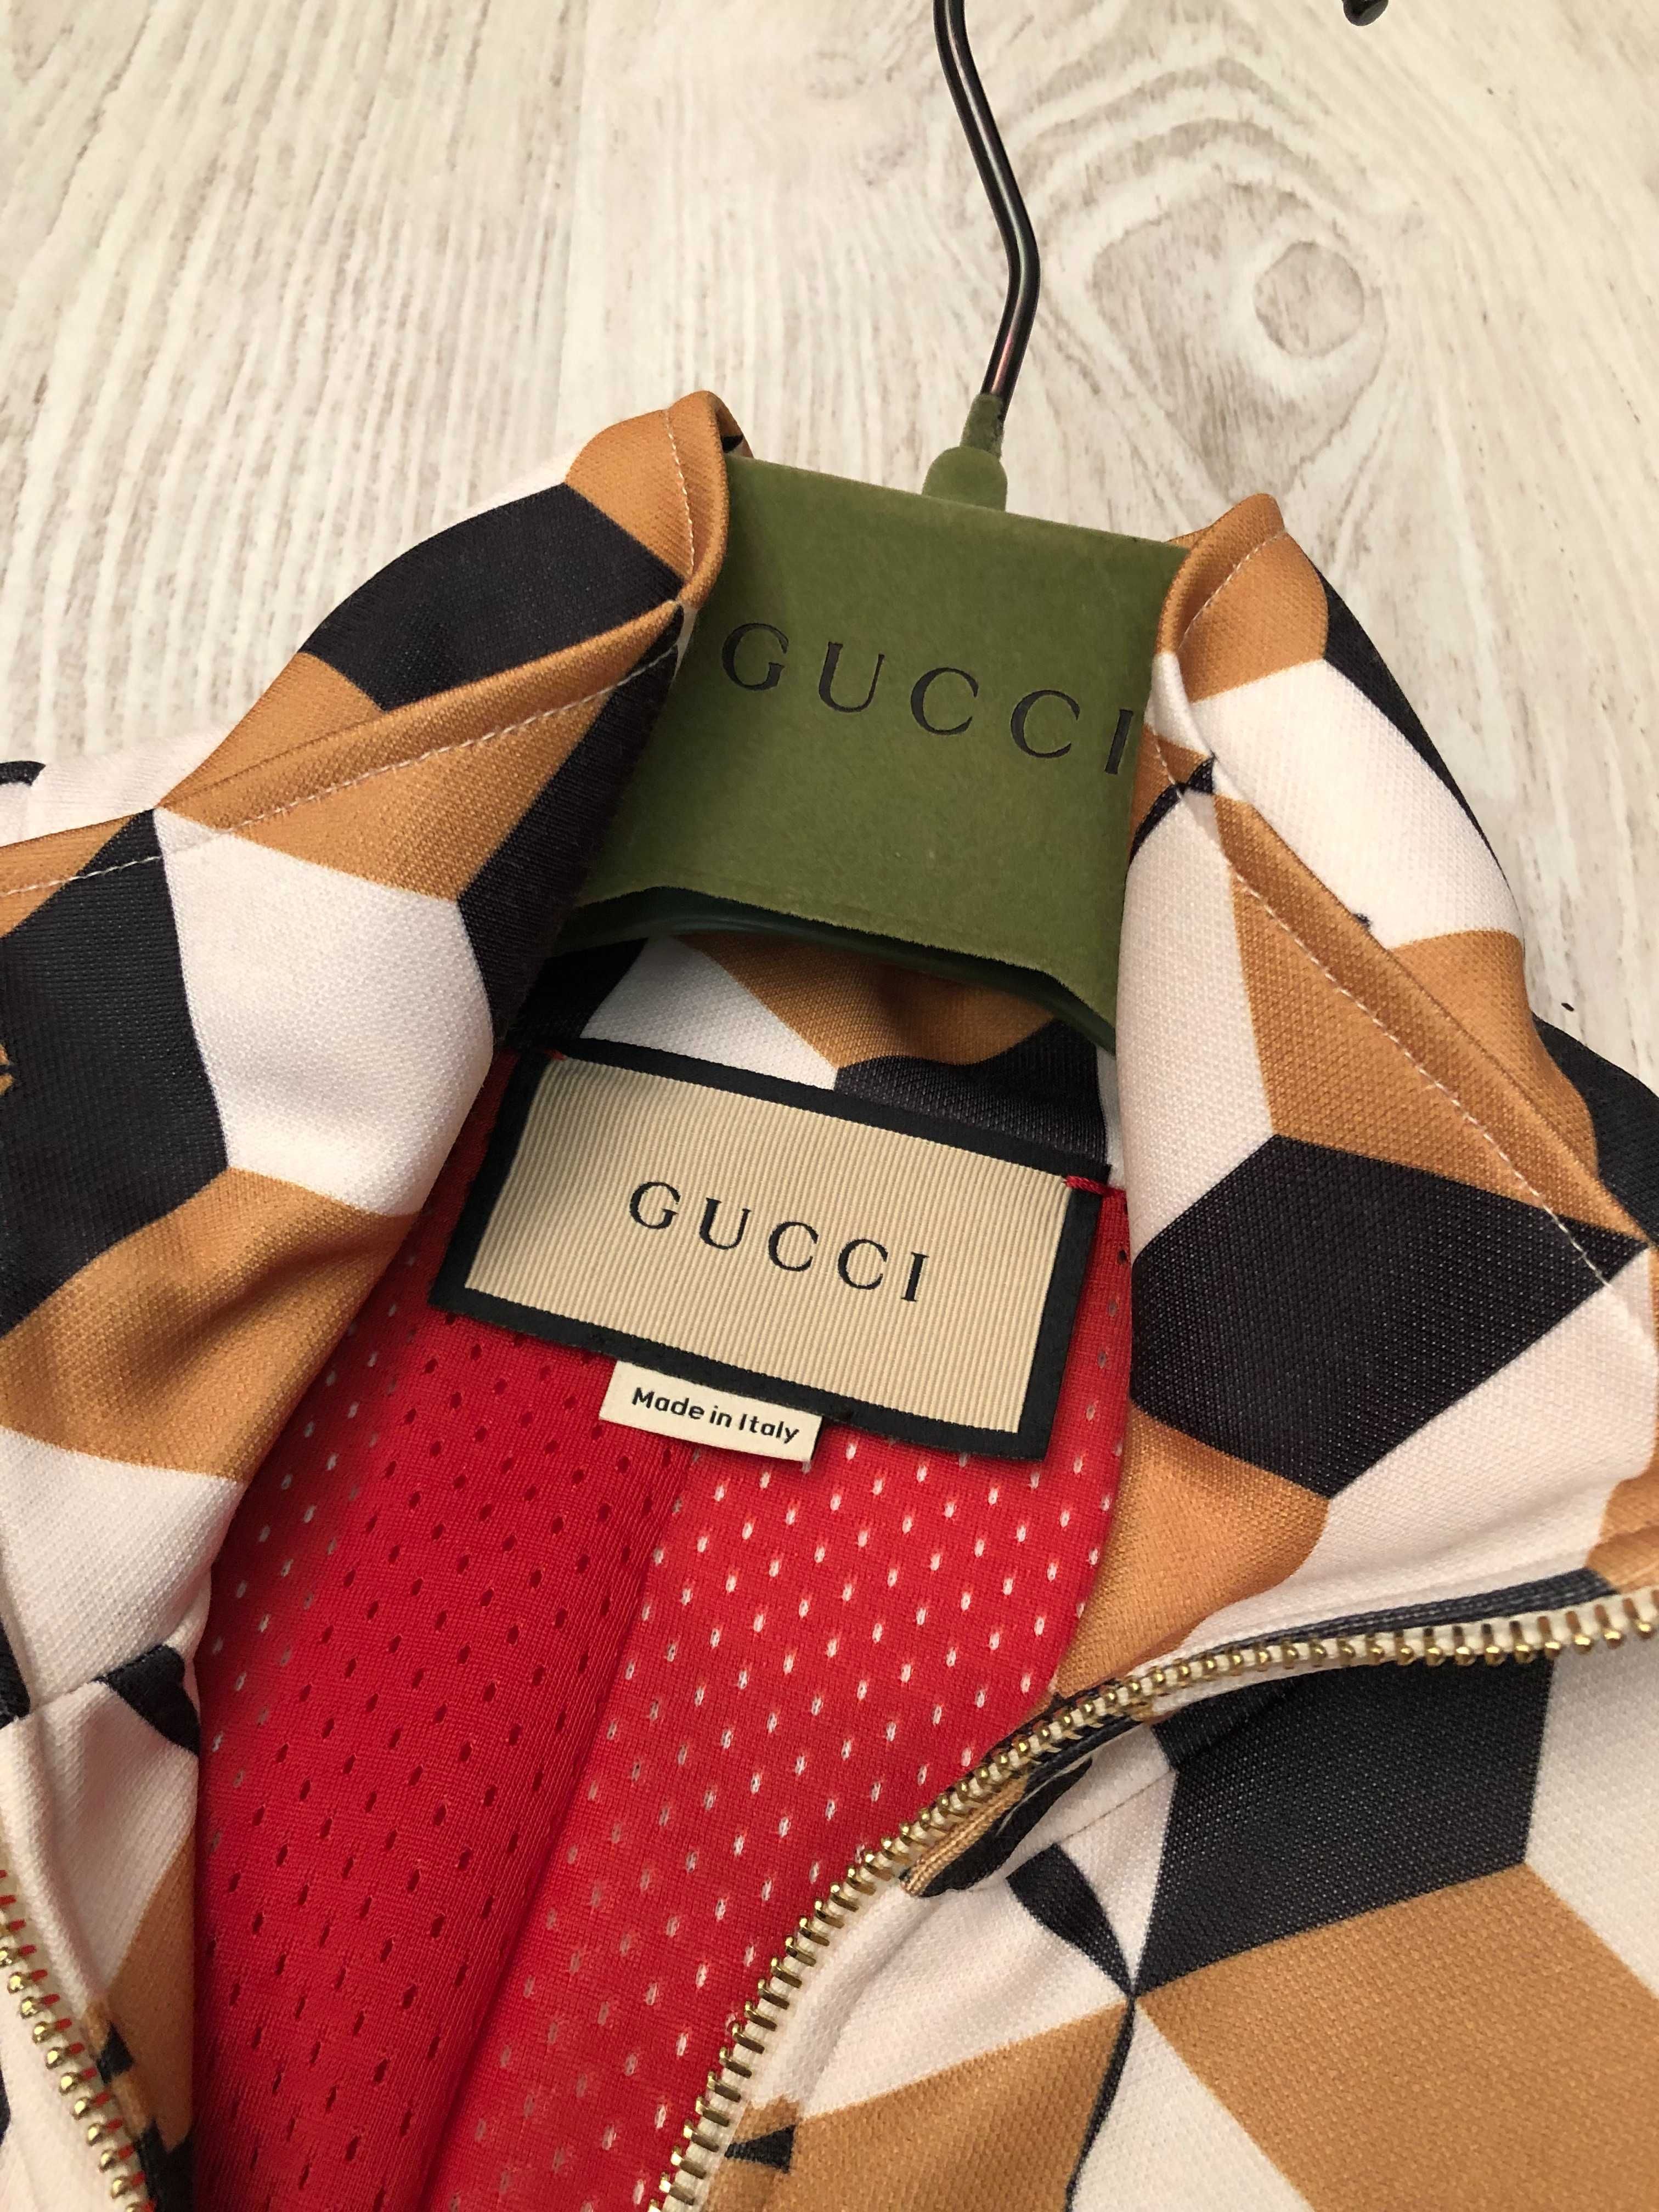 Gucci geaca fas, M-L oversize, originala, retail 1500 euro